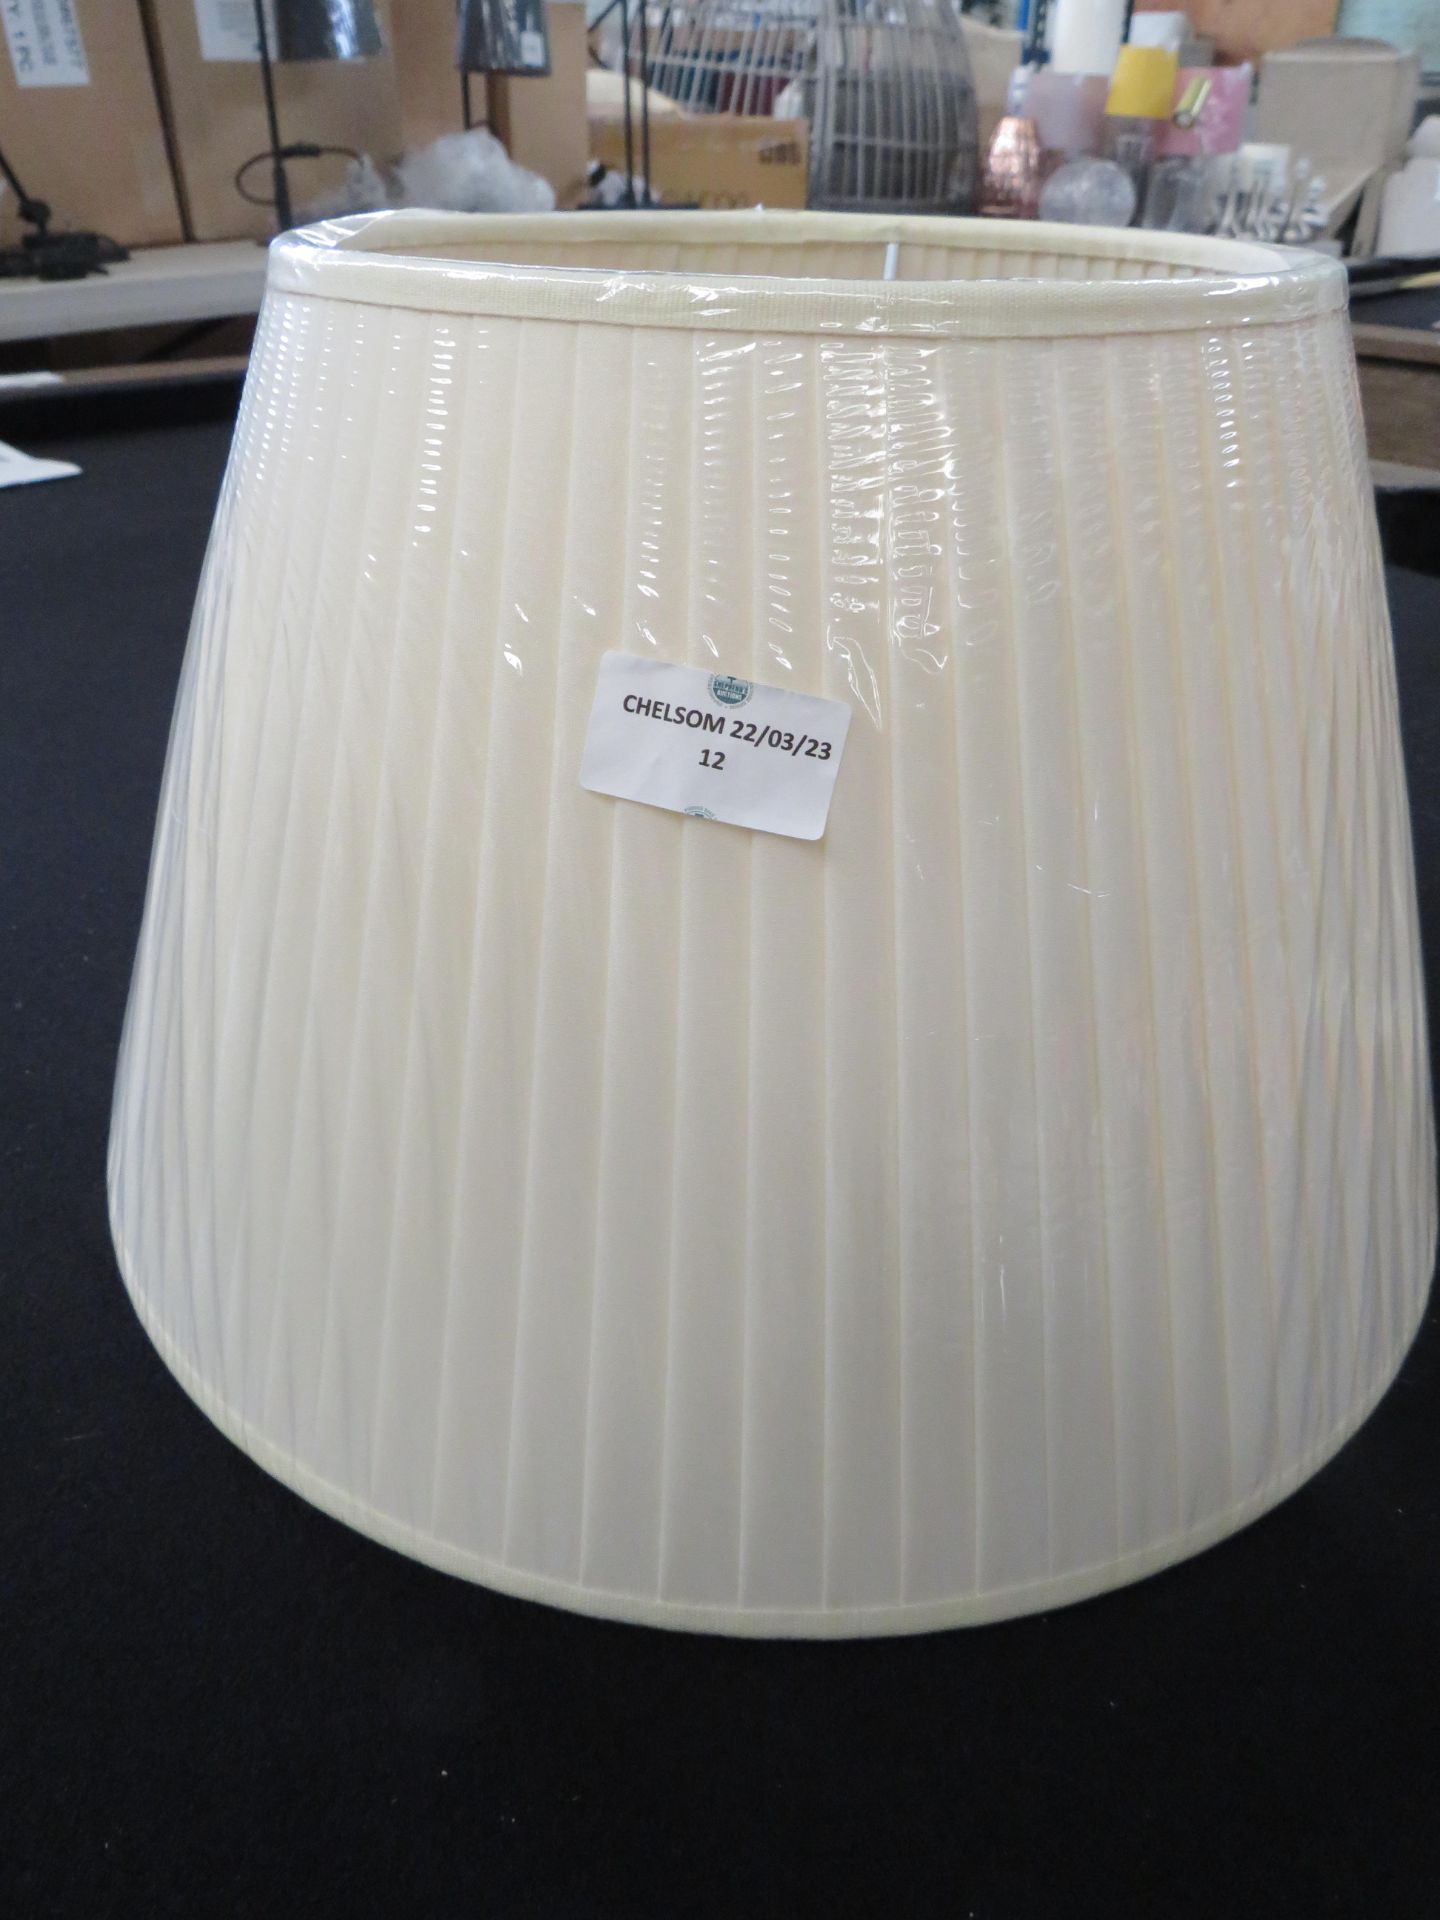 Chelsom Cream Silk 23cm Lamp Shade new see image